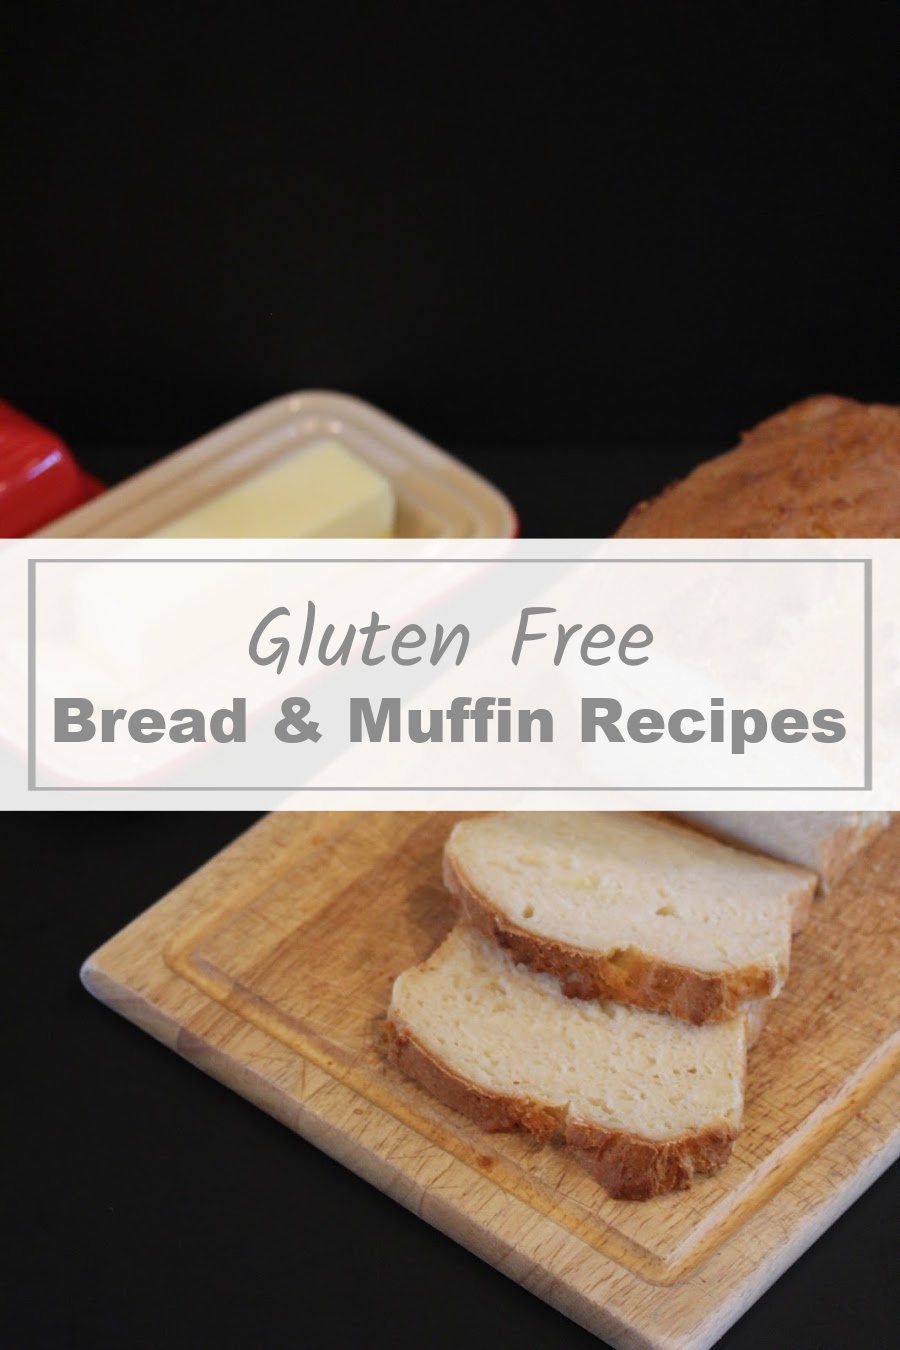 https://gfkitchenadventures.com/wp-content/uploads/2020/09/Gluten-Free-Bread-and-Muffin-Recipes-1.jpg